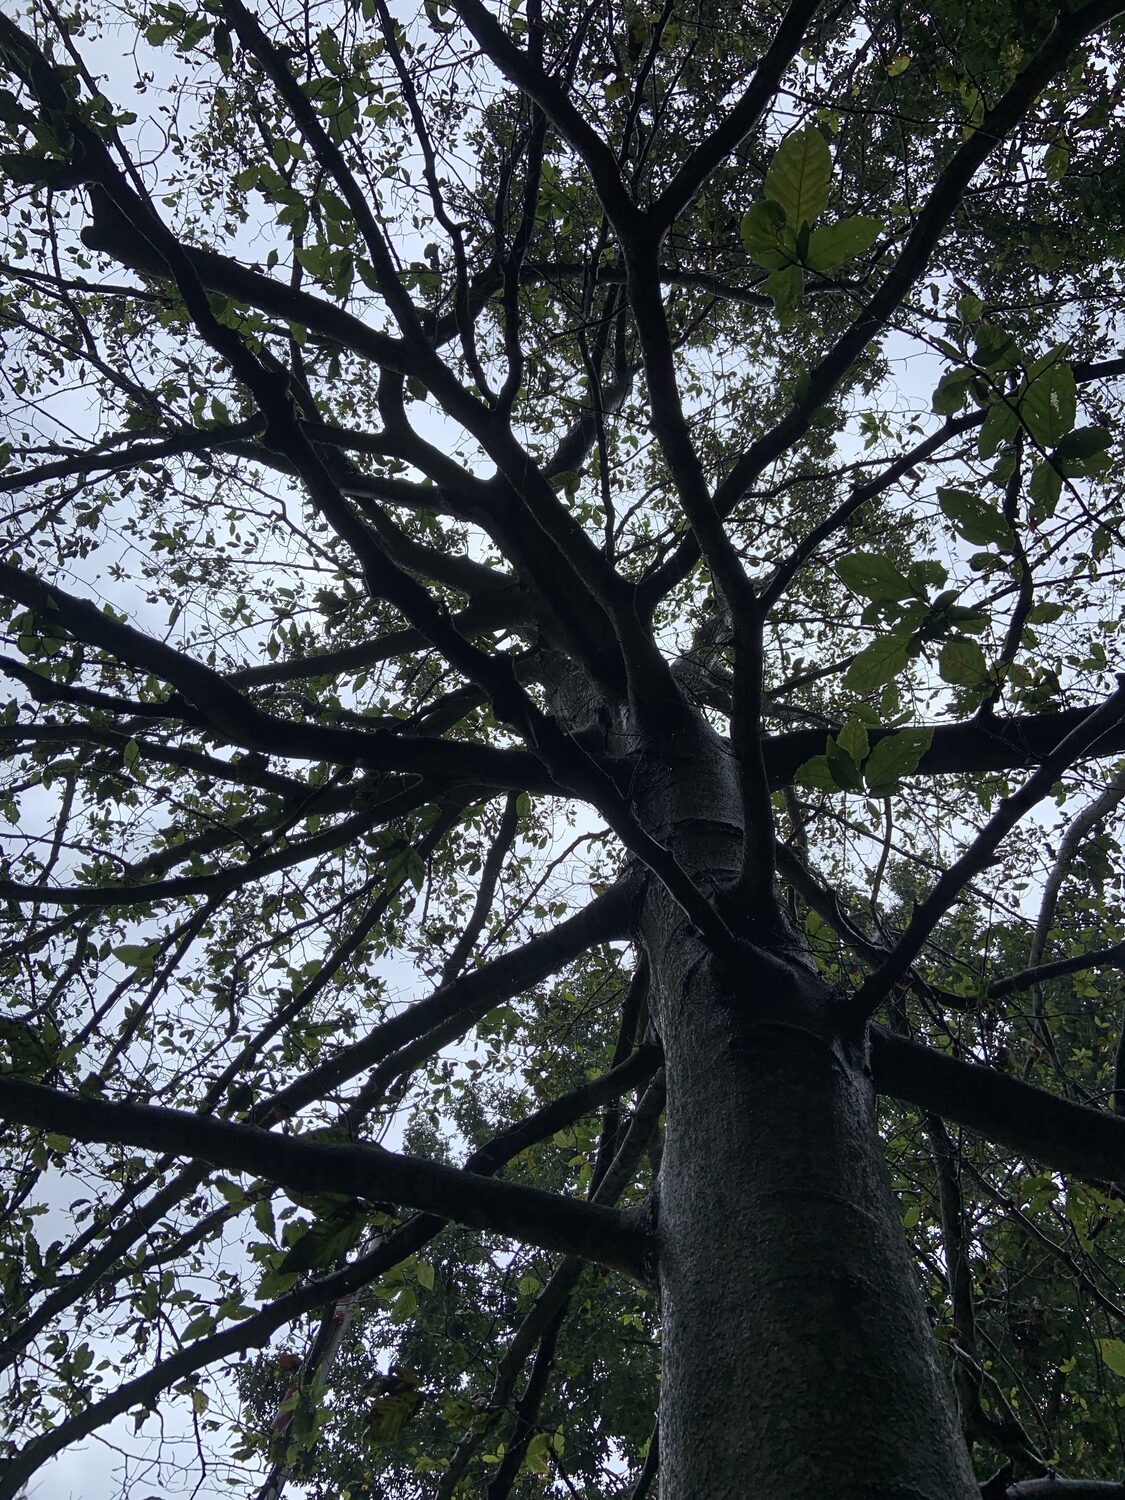 A diseased beech tree has far fewer leaves than normal. STEPHEN J. KOTZ